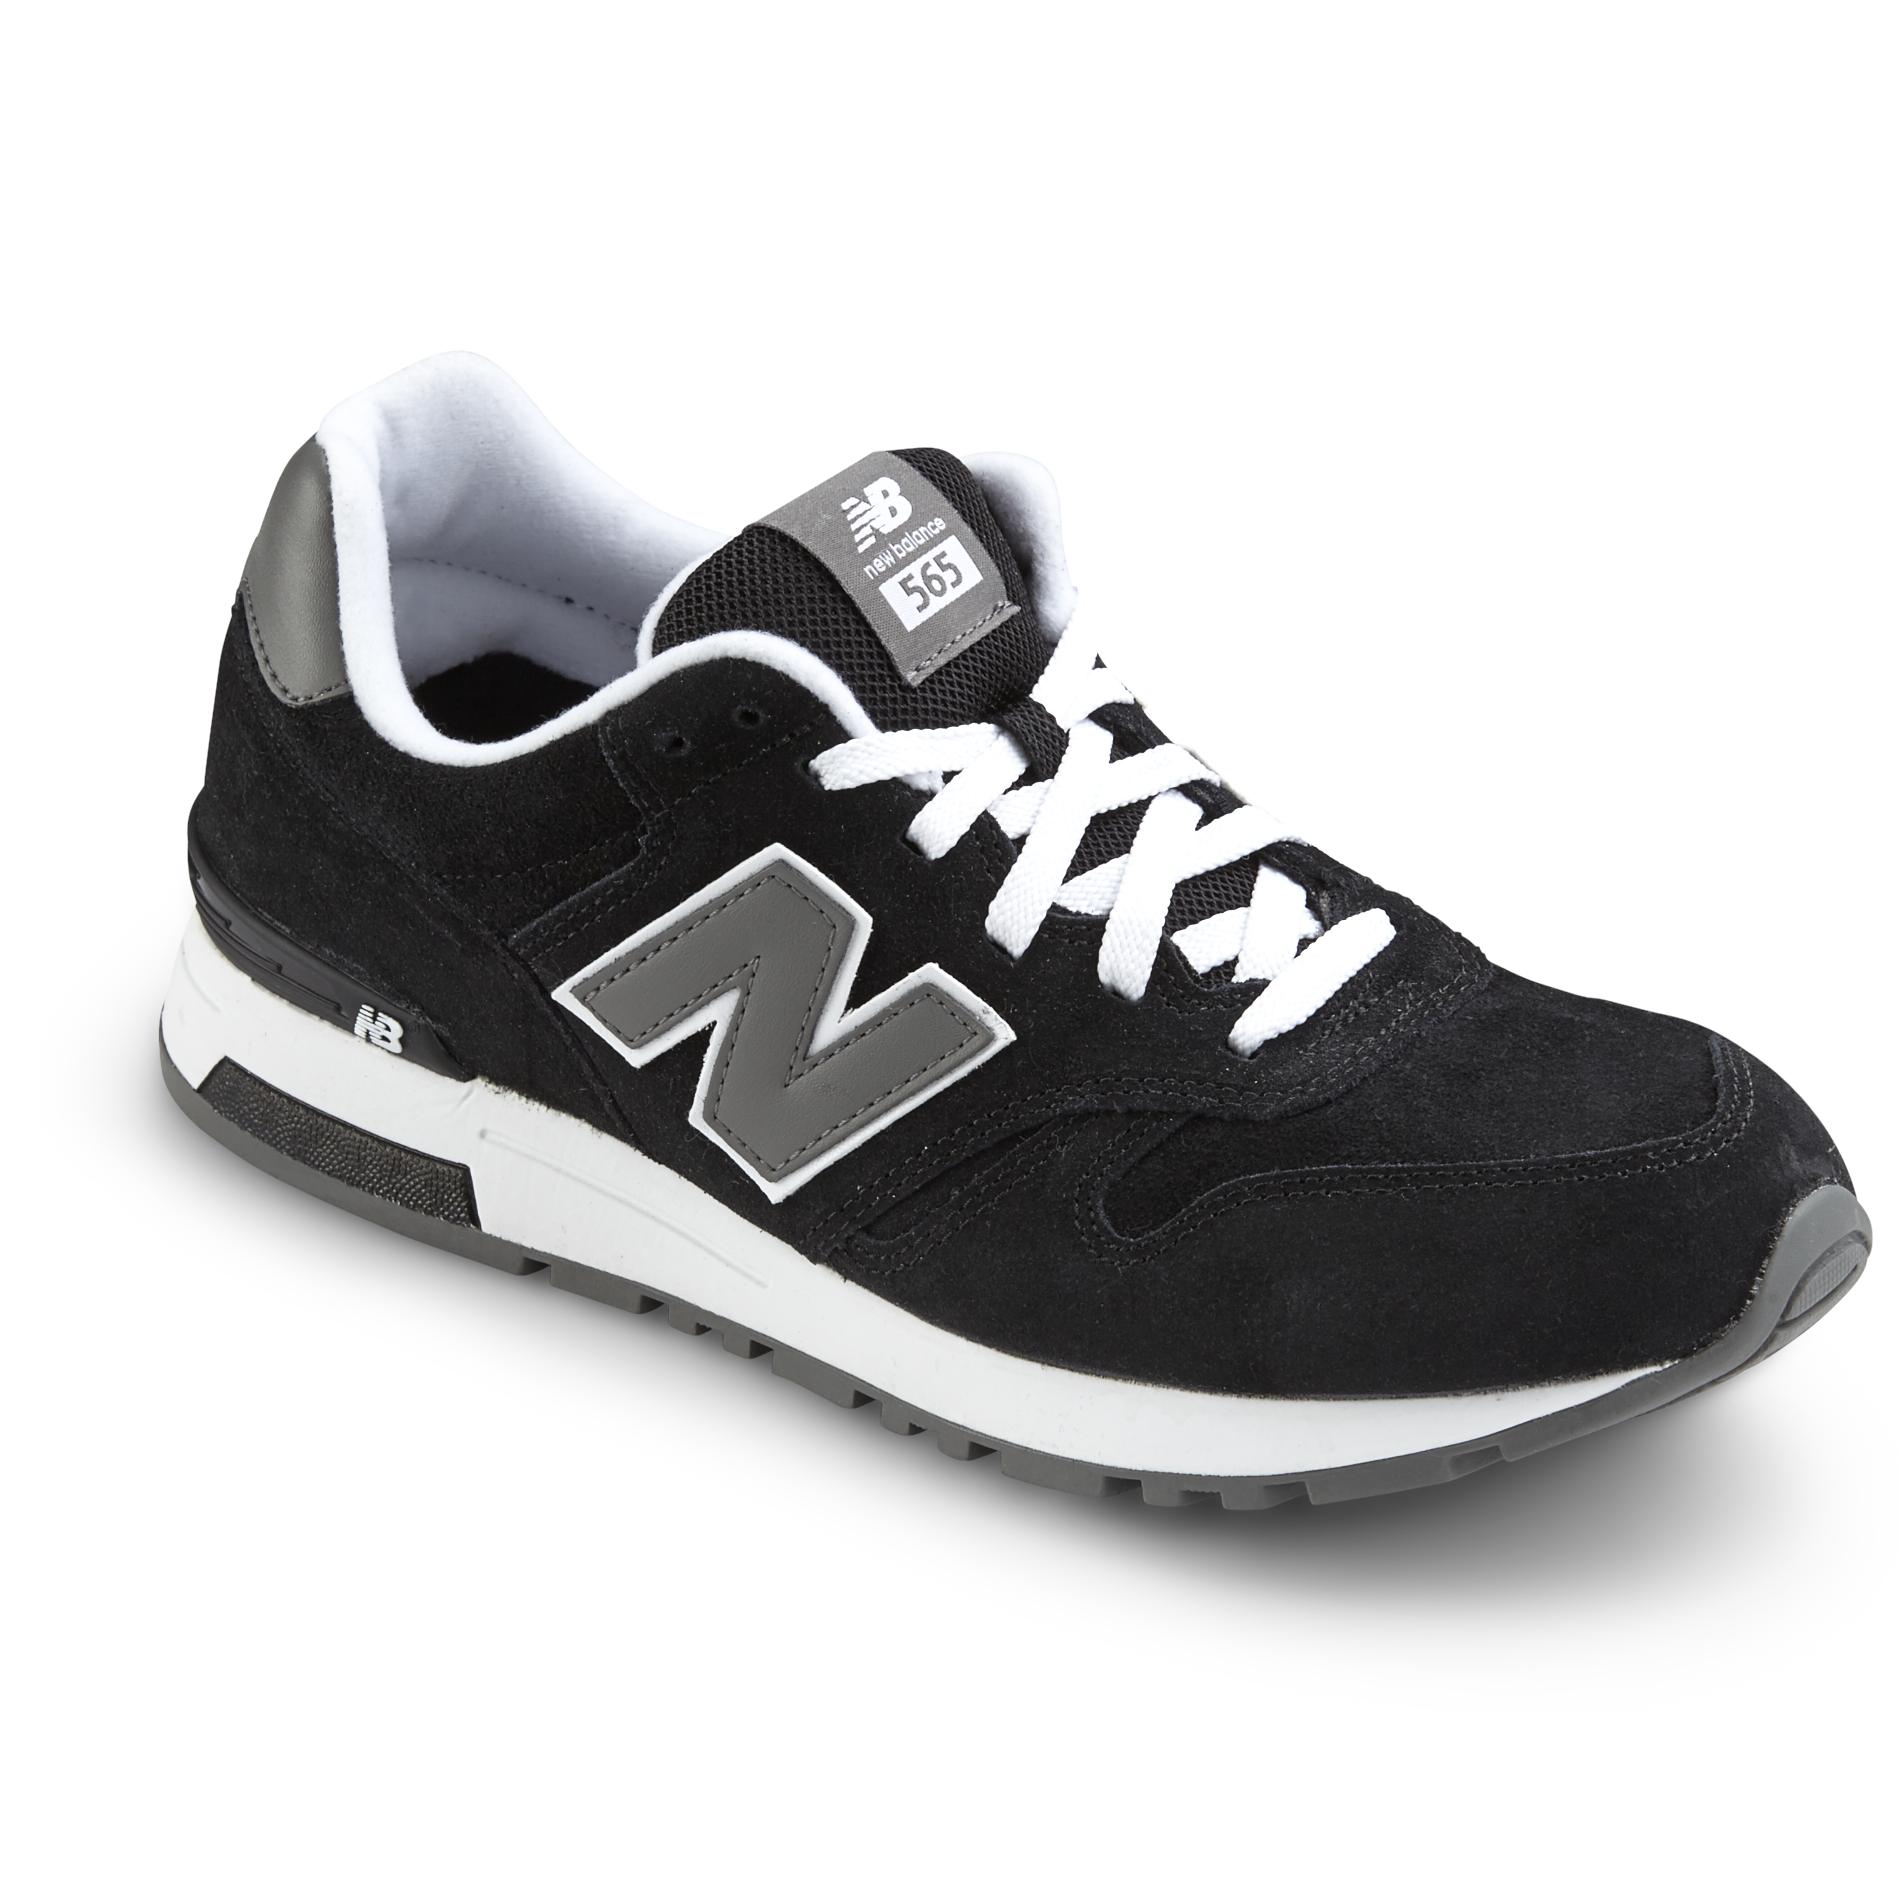 New Balance Men's 565 Black/White/Gray Classic Athletic Shoe